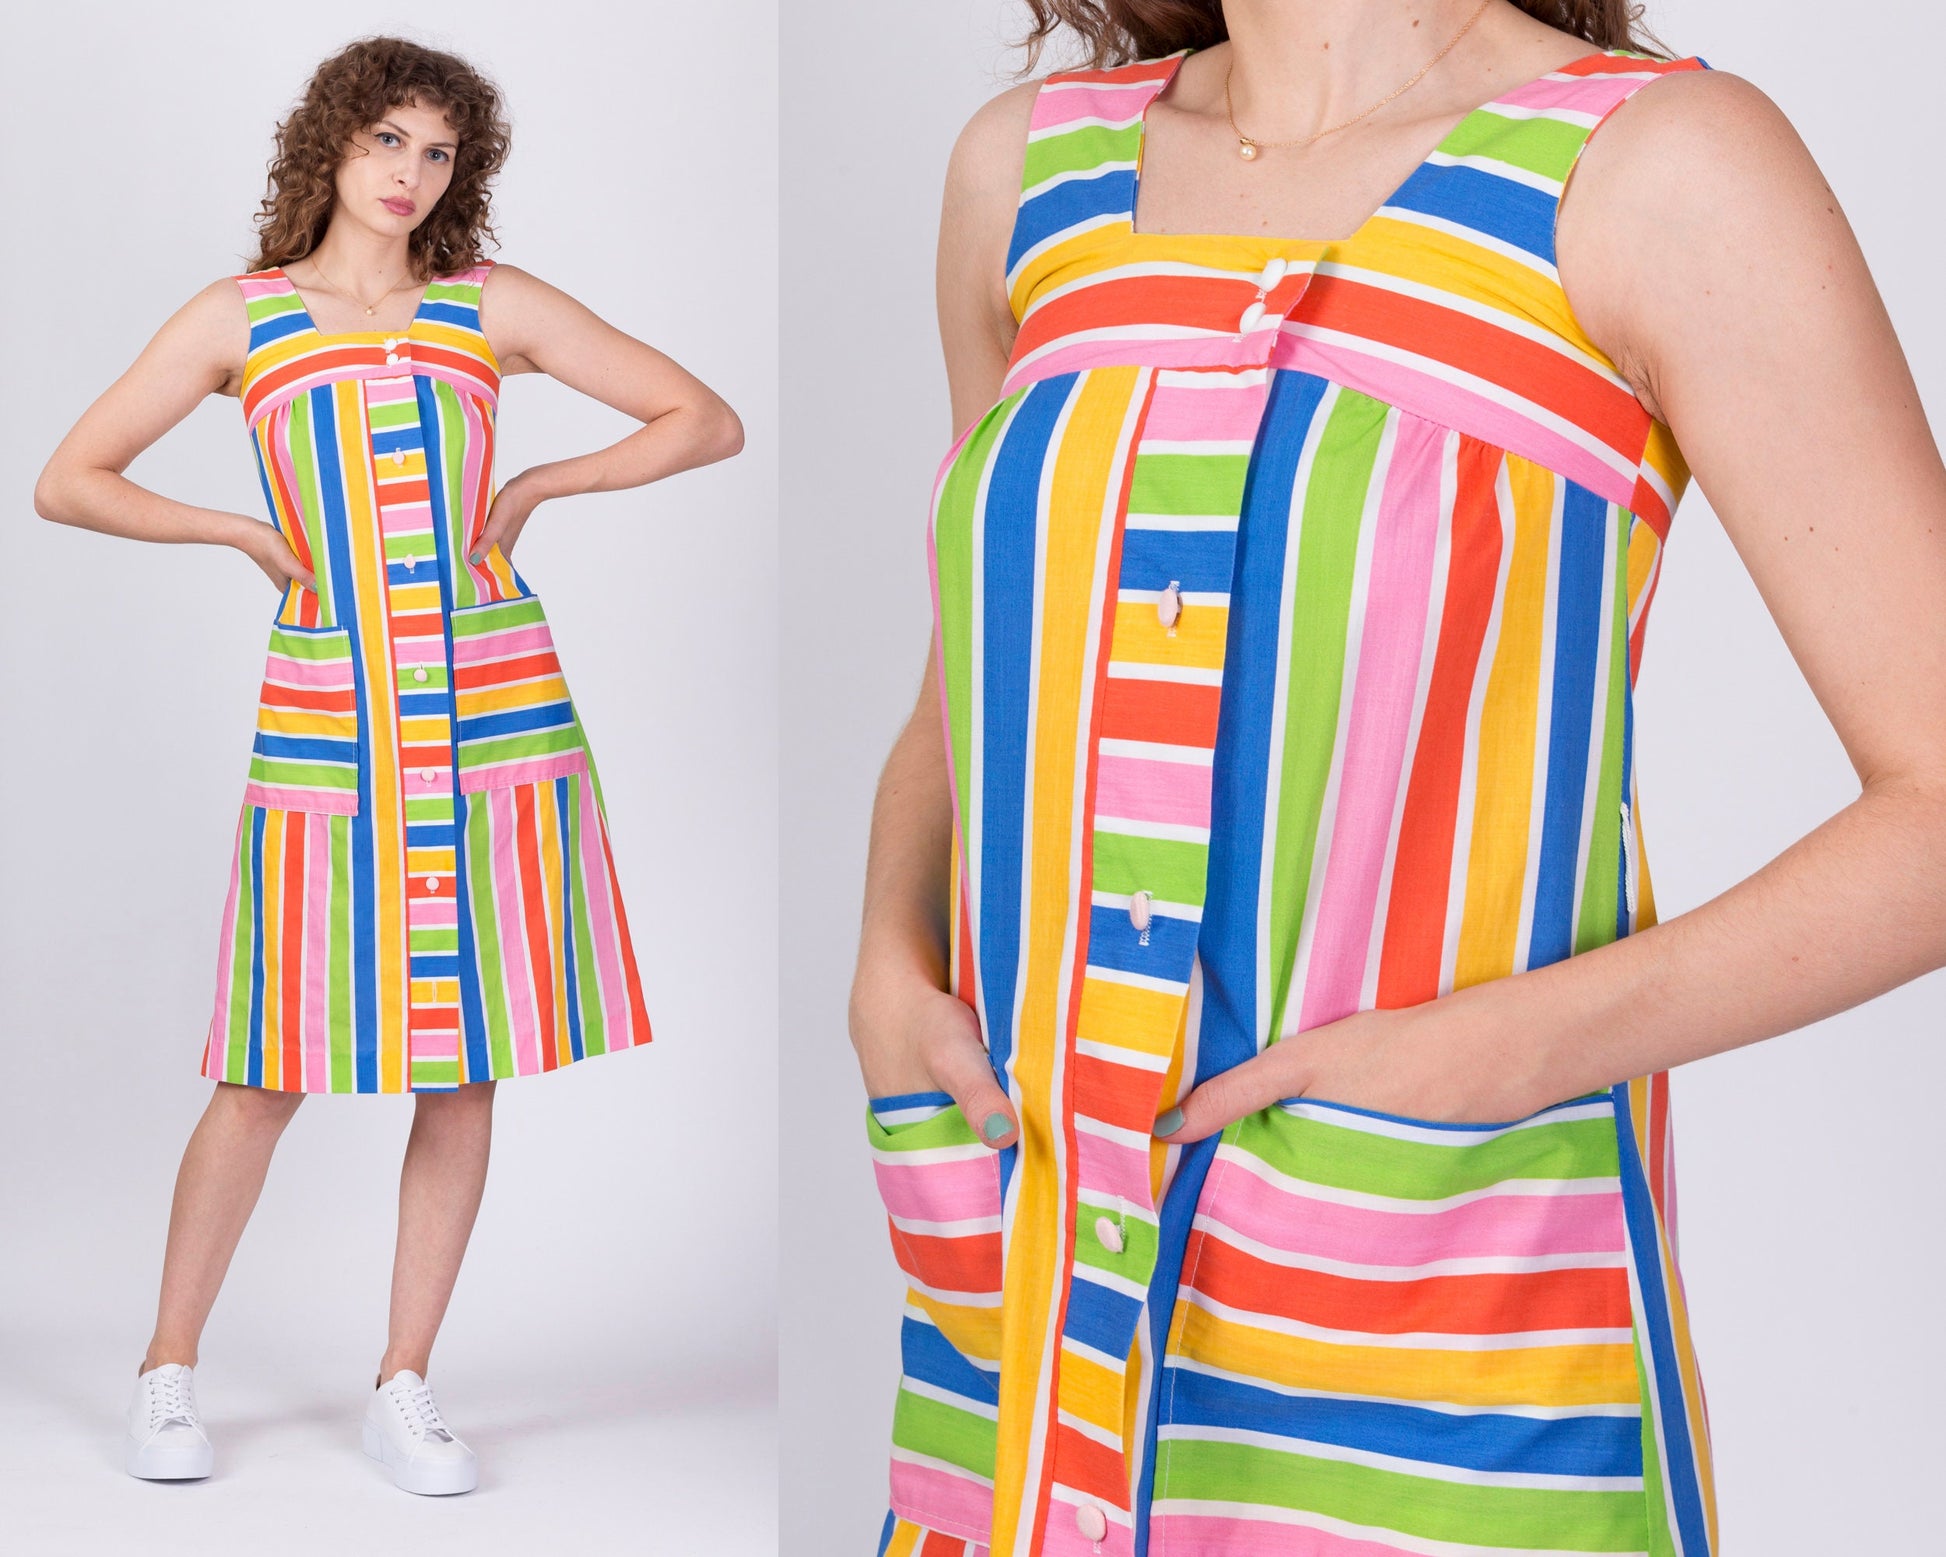 Vintage 70s Rainbow Striped Midi Dress - Petite XS 